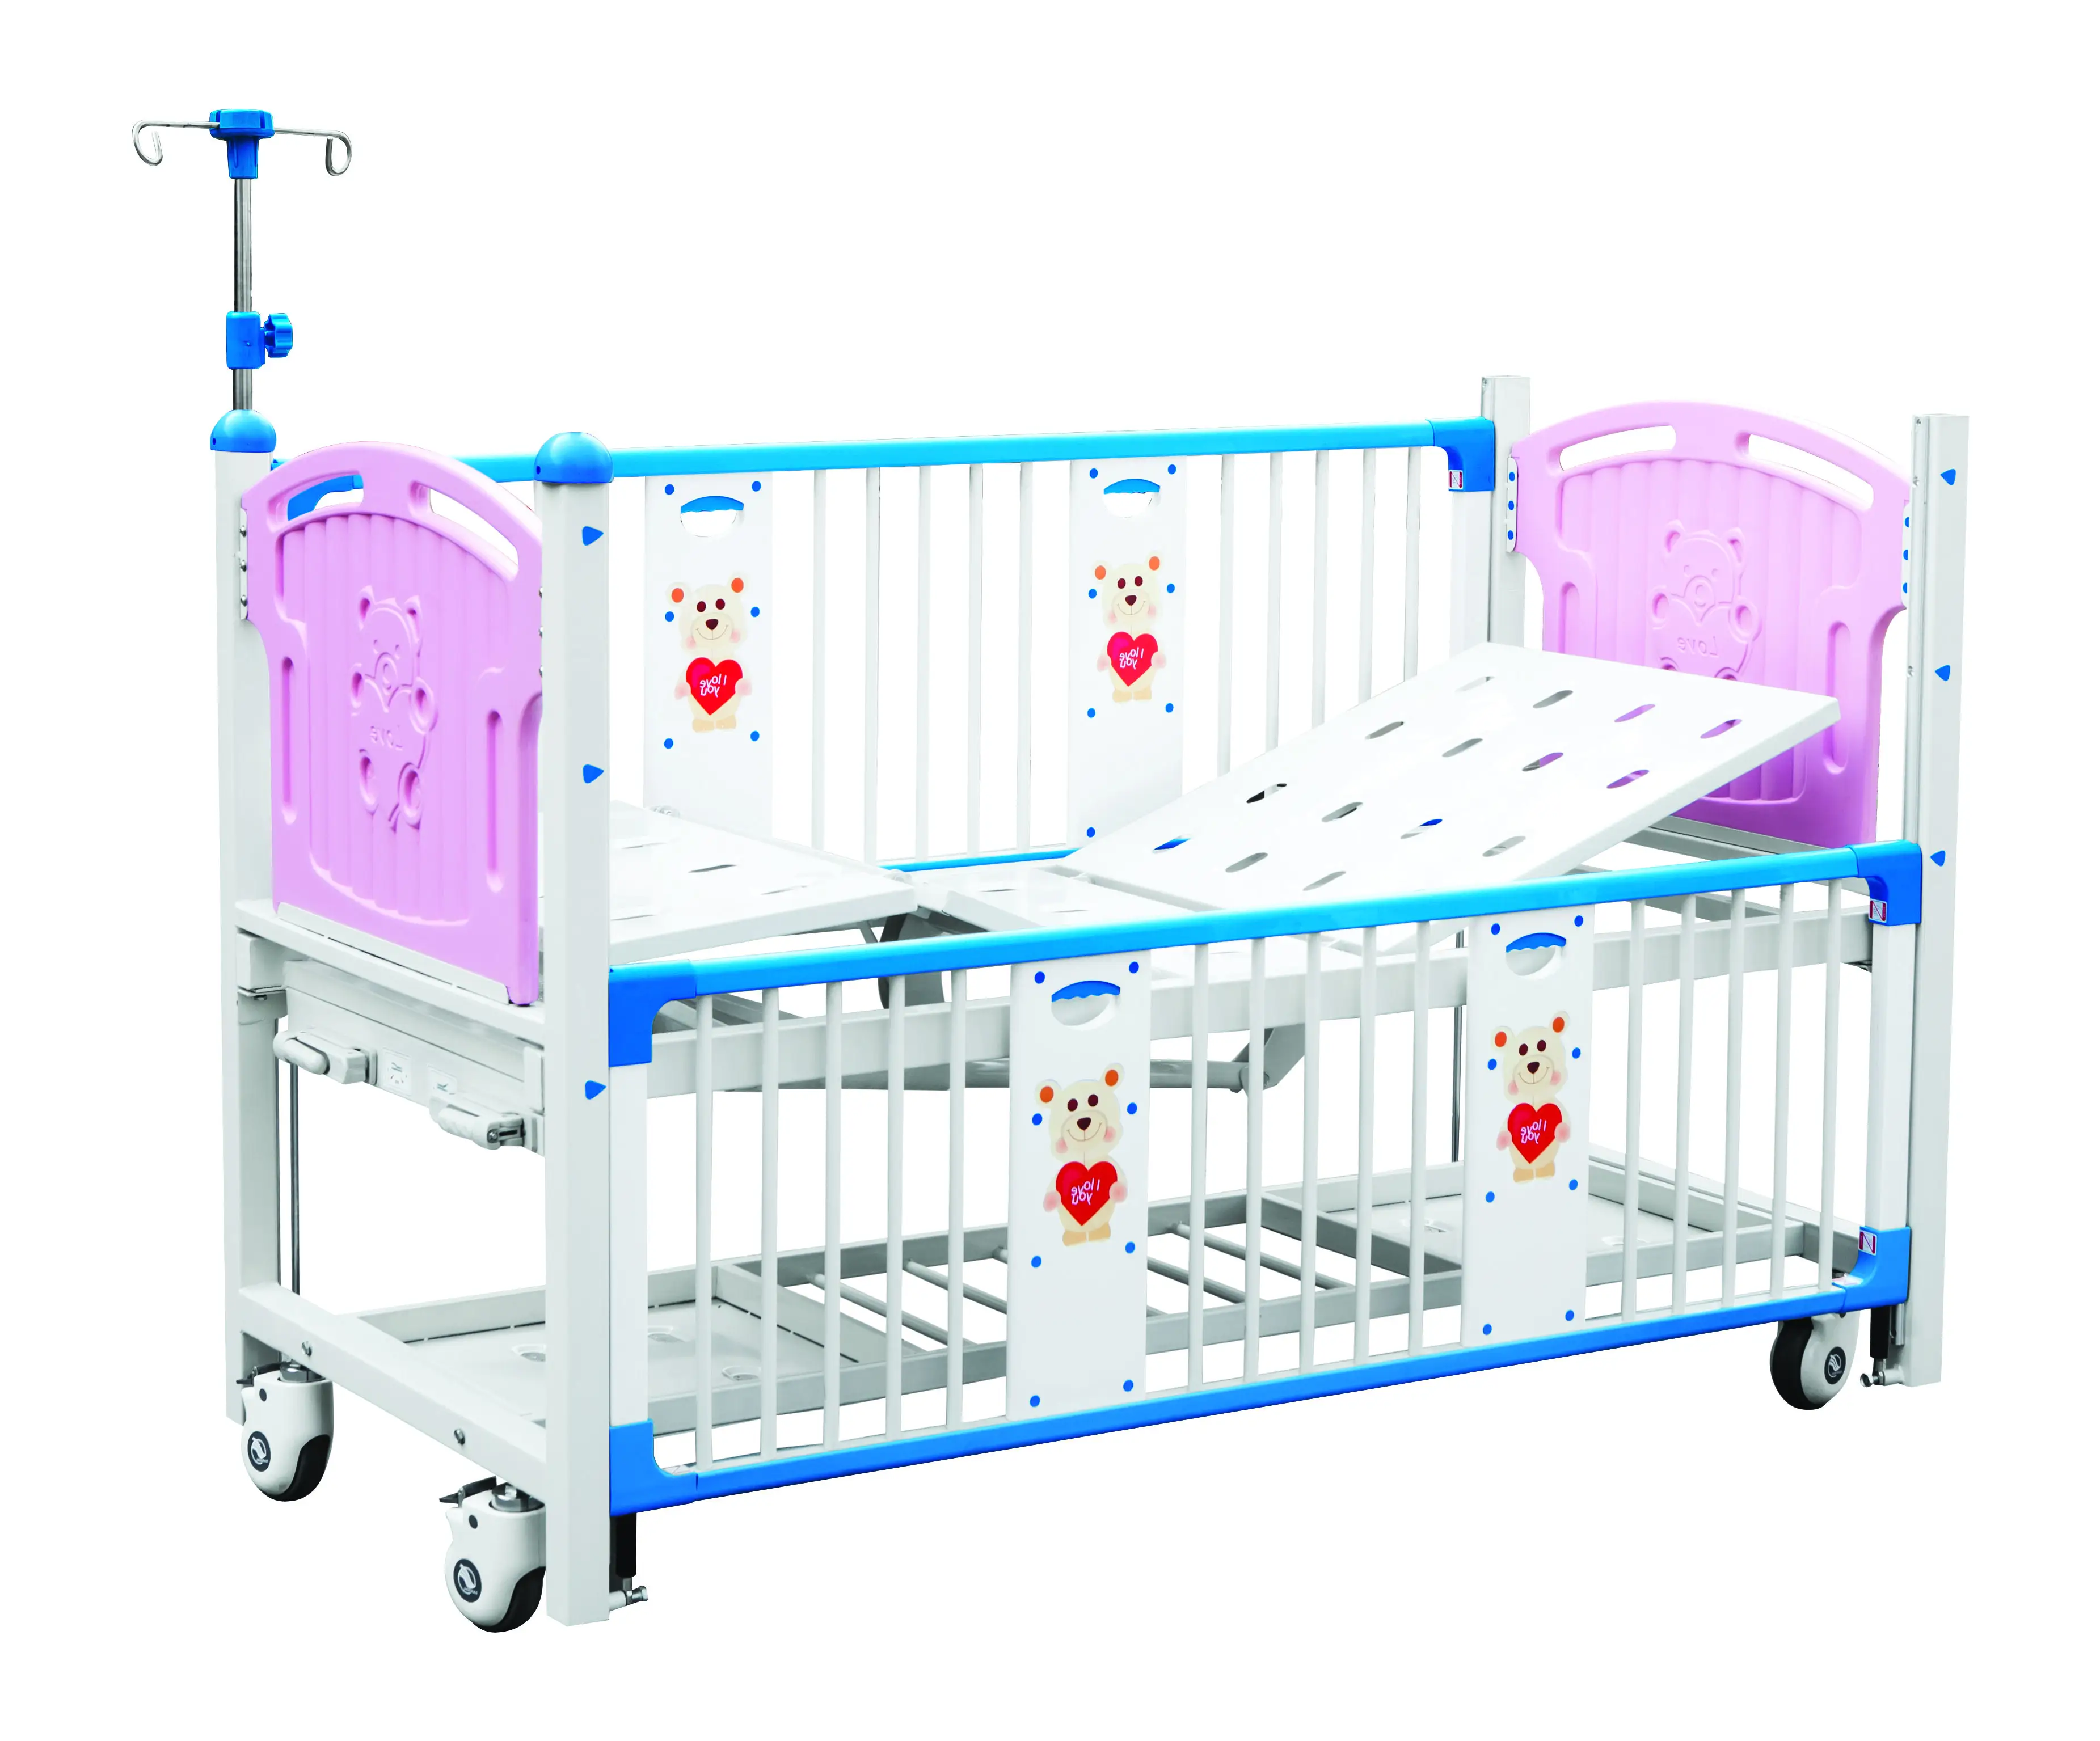 Safest Three-Crank Hand-Operated Children's Bed